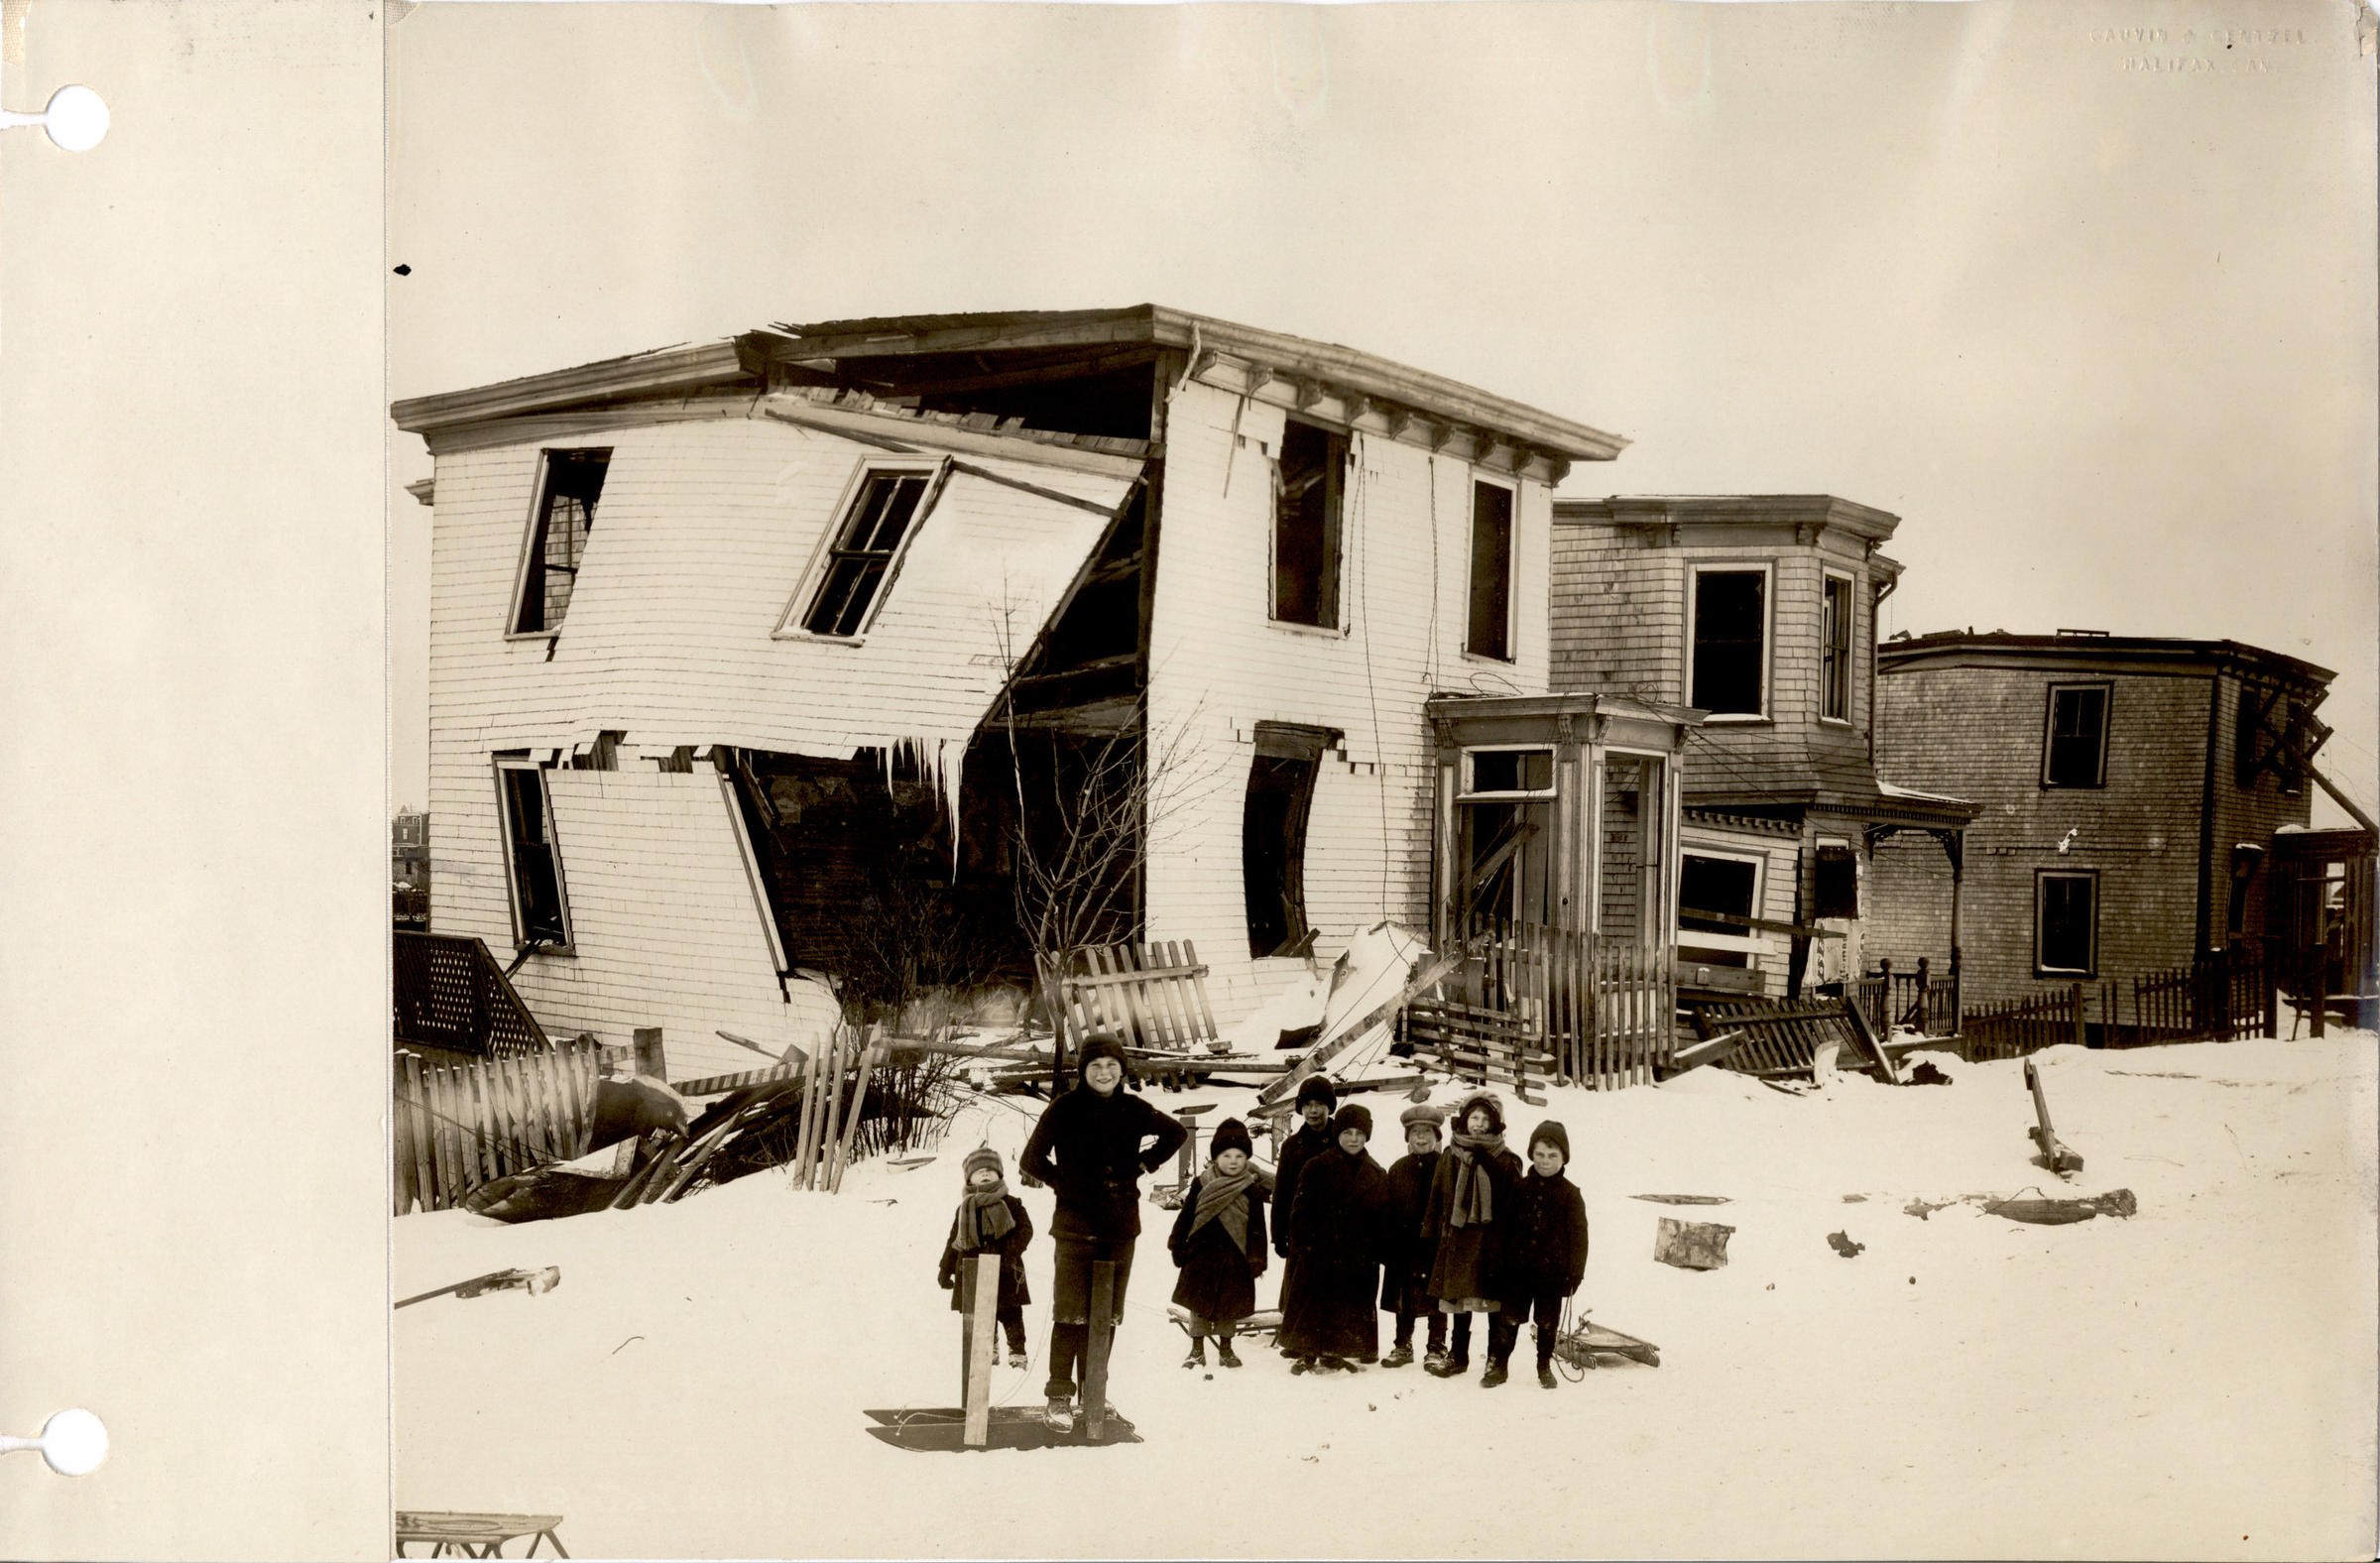 Massachusetts-Halifax Relief Committee Photographs, c. 1917, State Library of Massachusetts